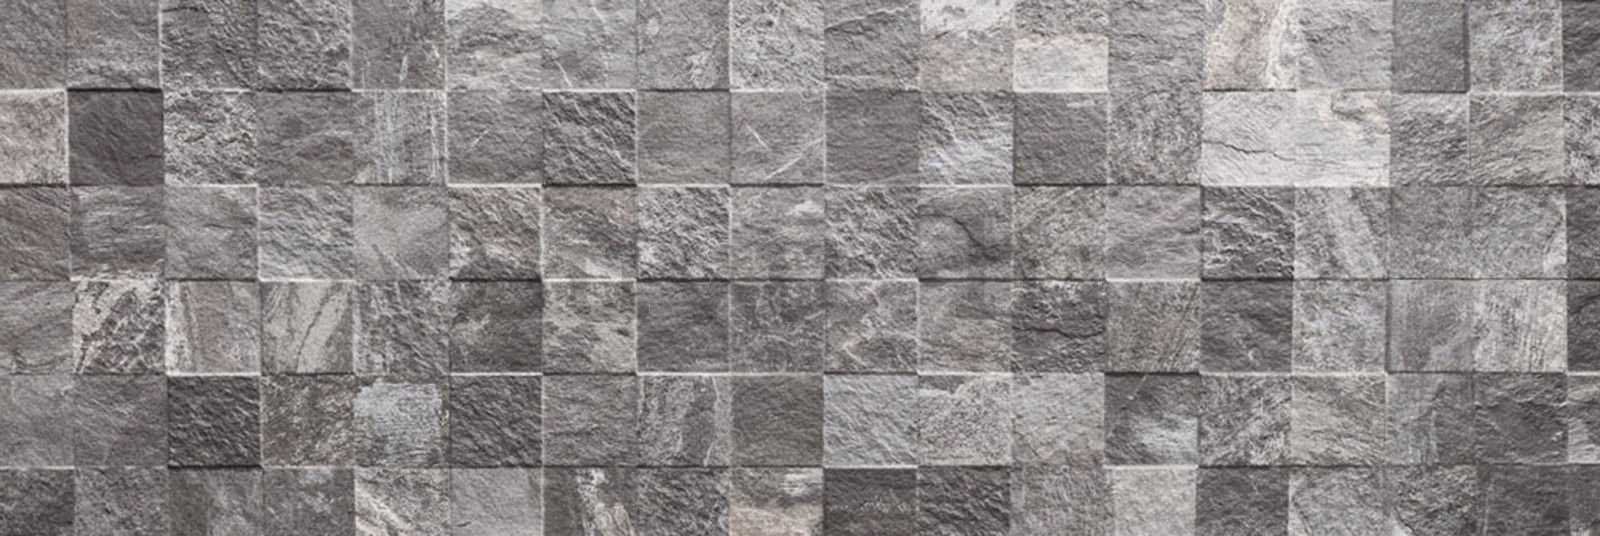 Samoljepljiva periva tapeta za kuhinju - Kamena obloga, 180x60 cm